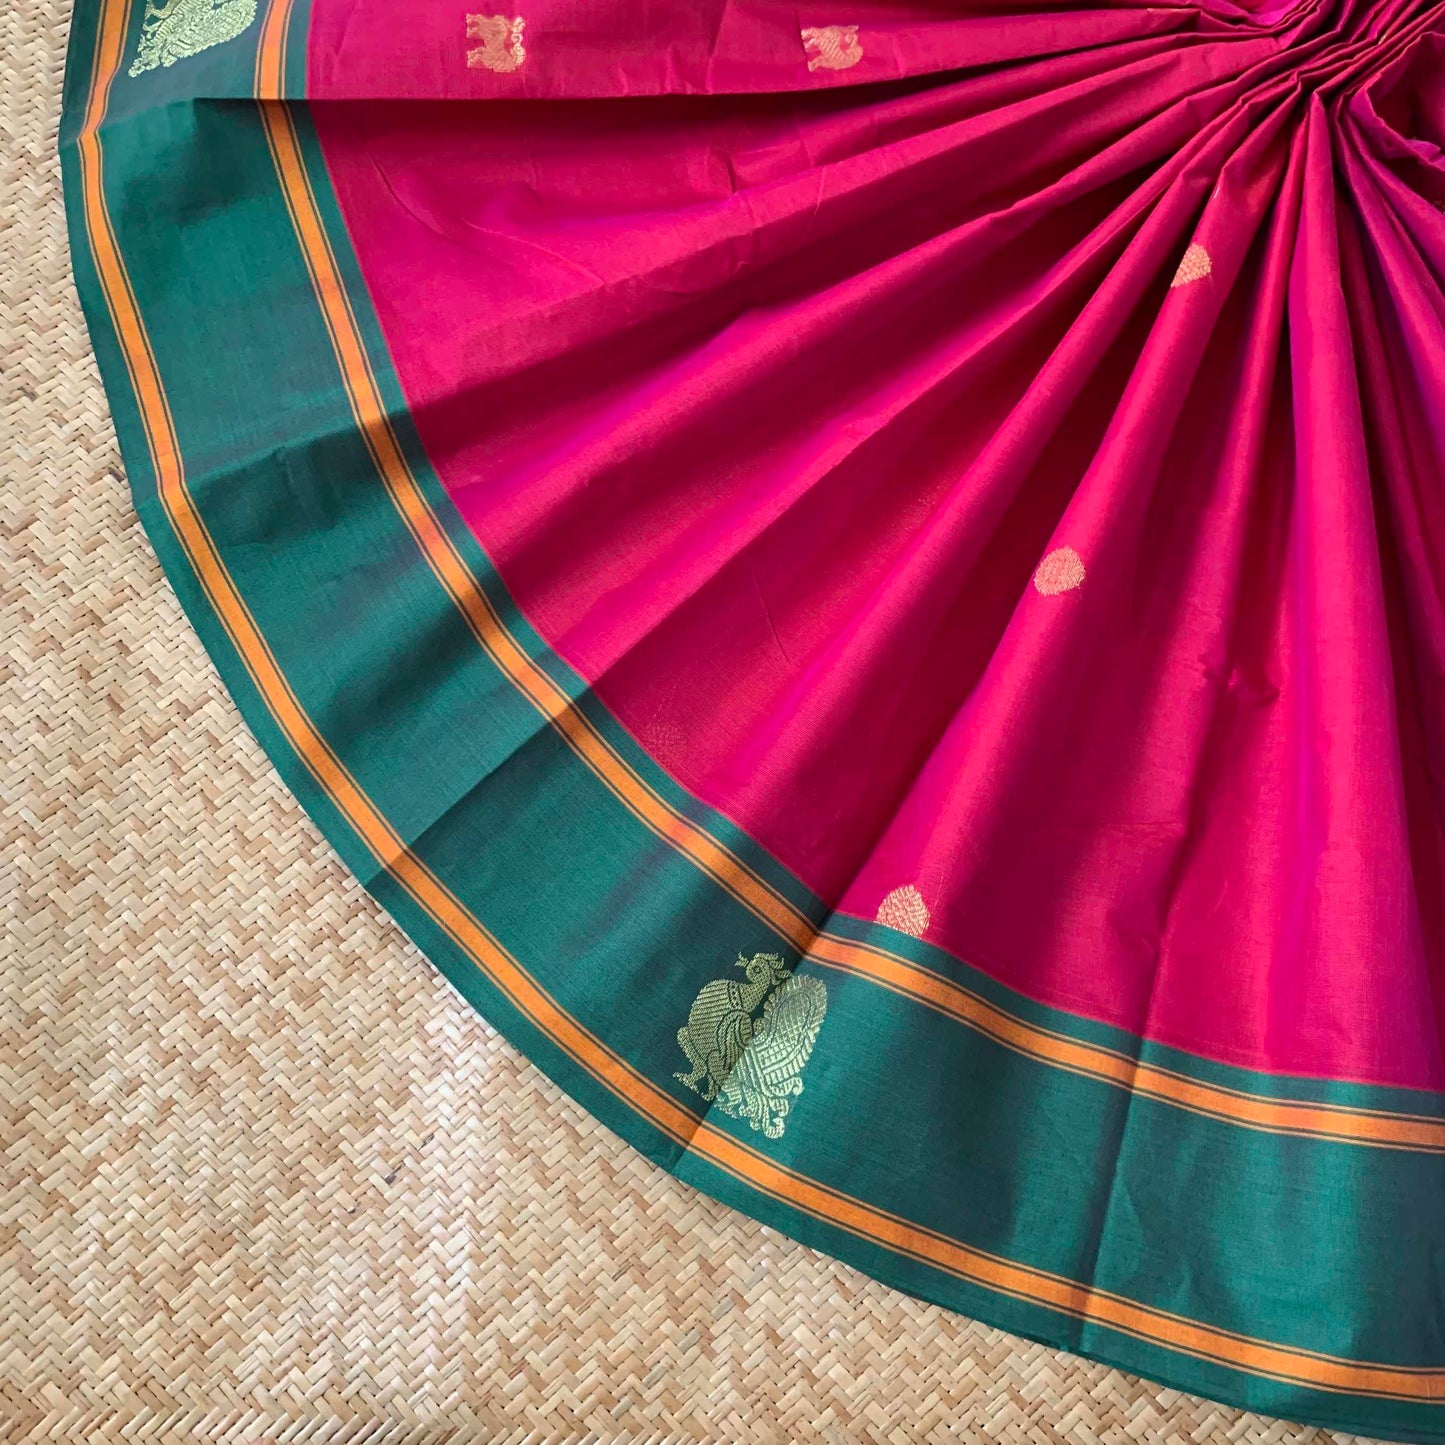 Pink Double Tone Saree With Green Border Grand Pallu, Yazhi Chakkaram Butta, Kanchipuram Cotton Saree